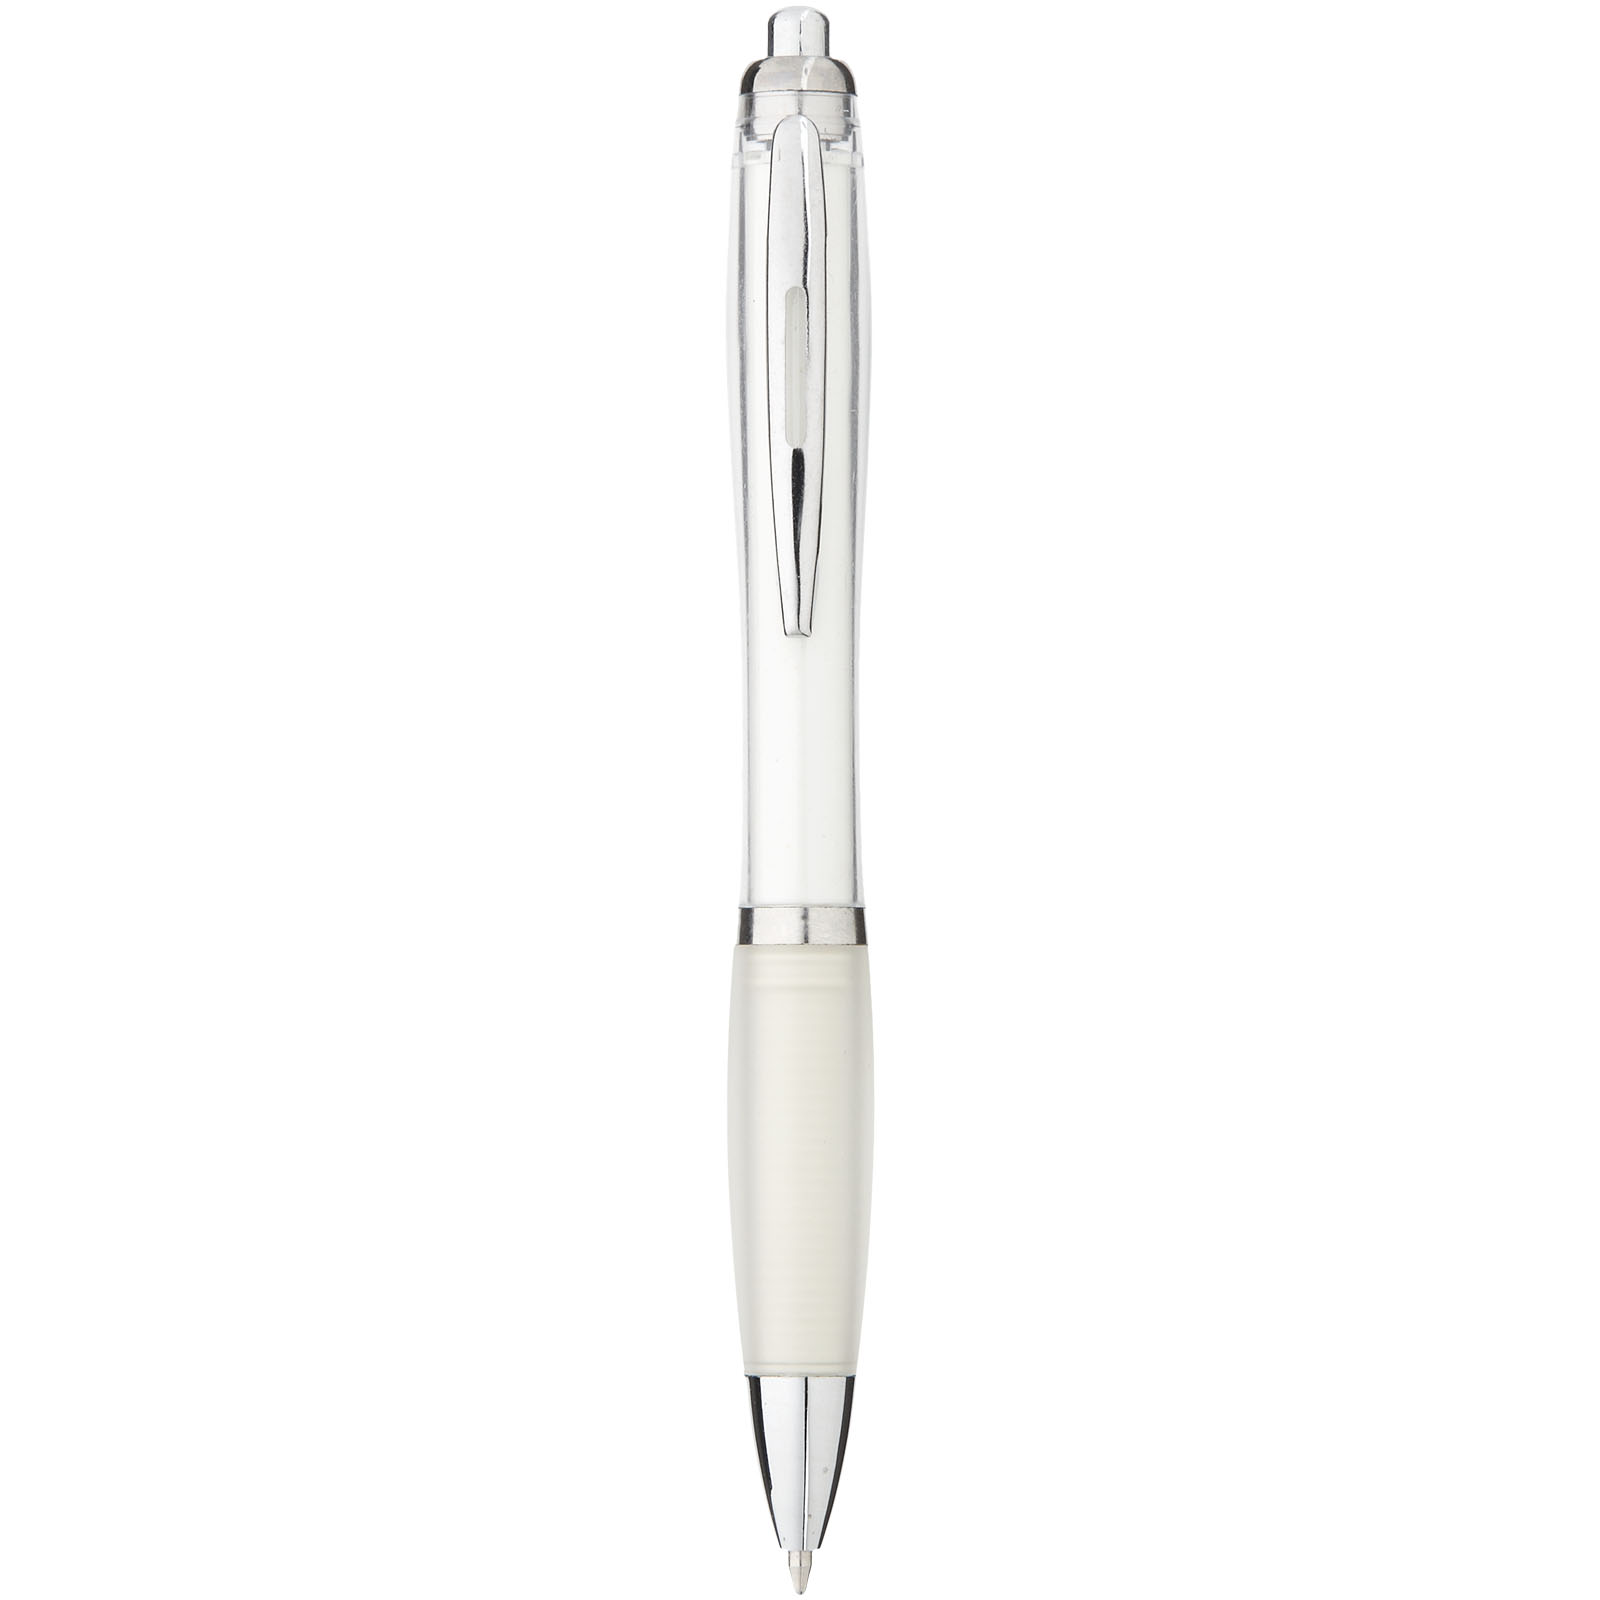 Advertising Ballpoint Pens - Nash ballpoint pen coloured barrel and grip